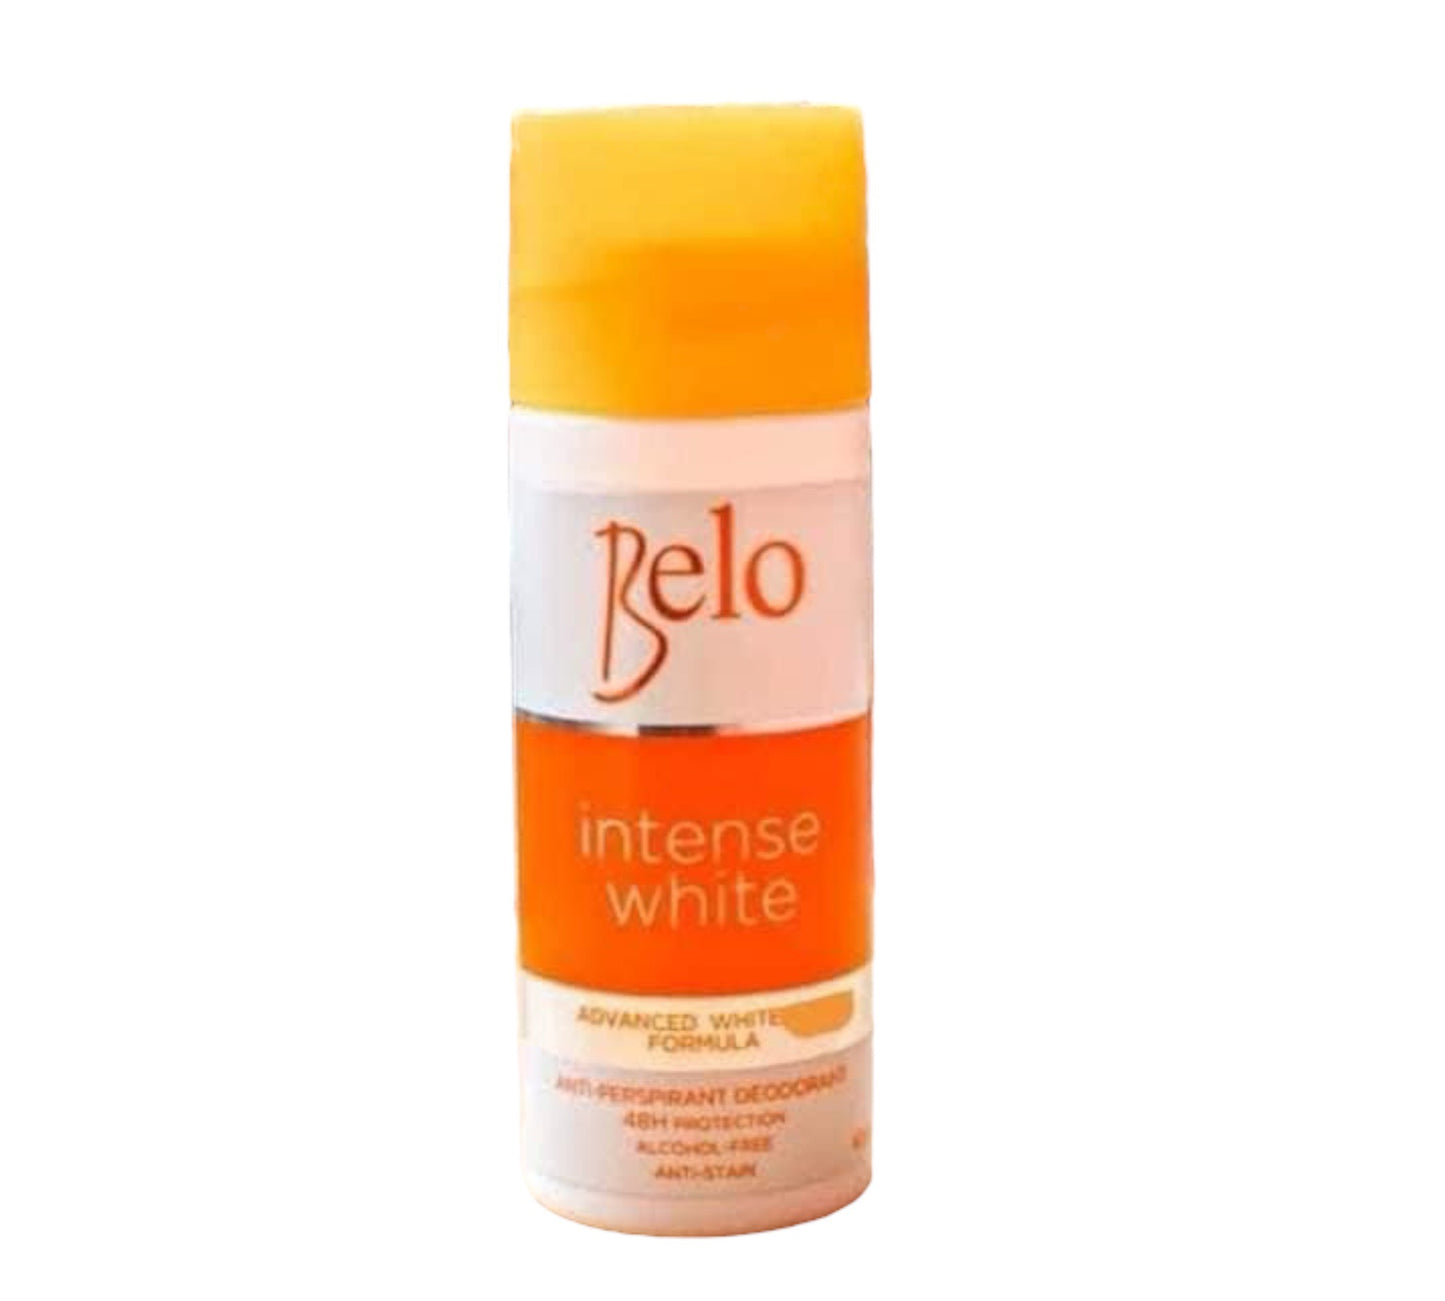 Belo underarm intense whitening Roll on -40ml